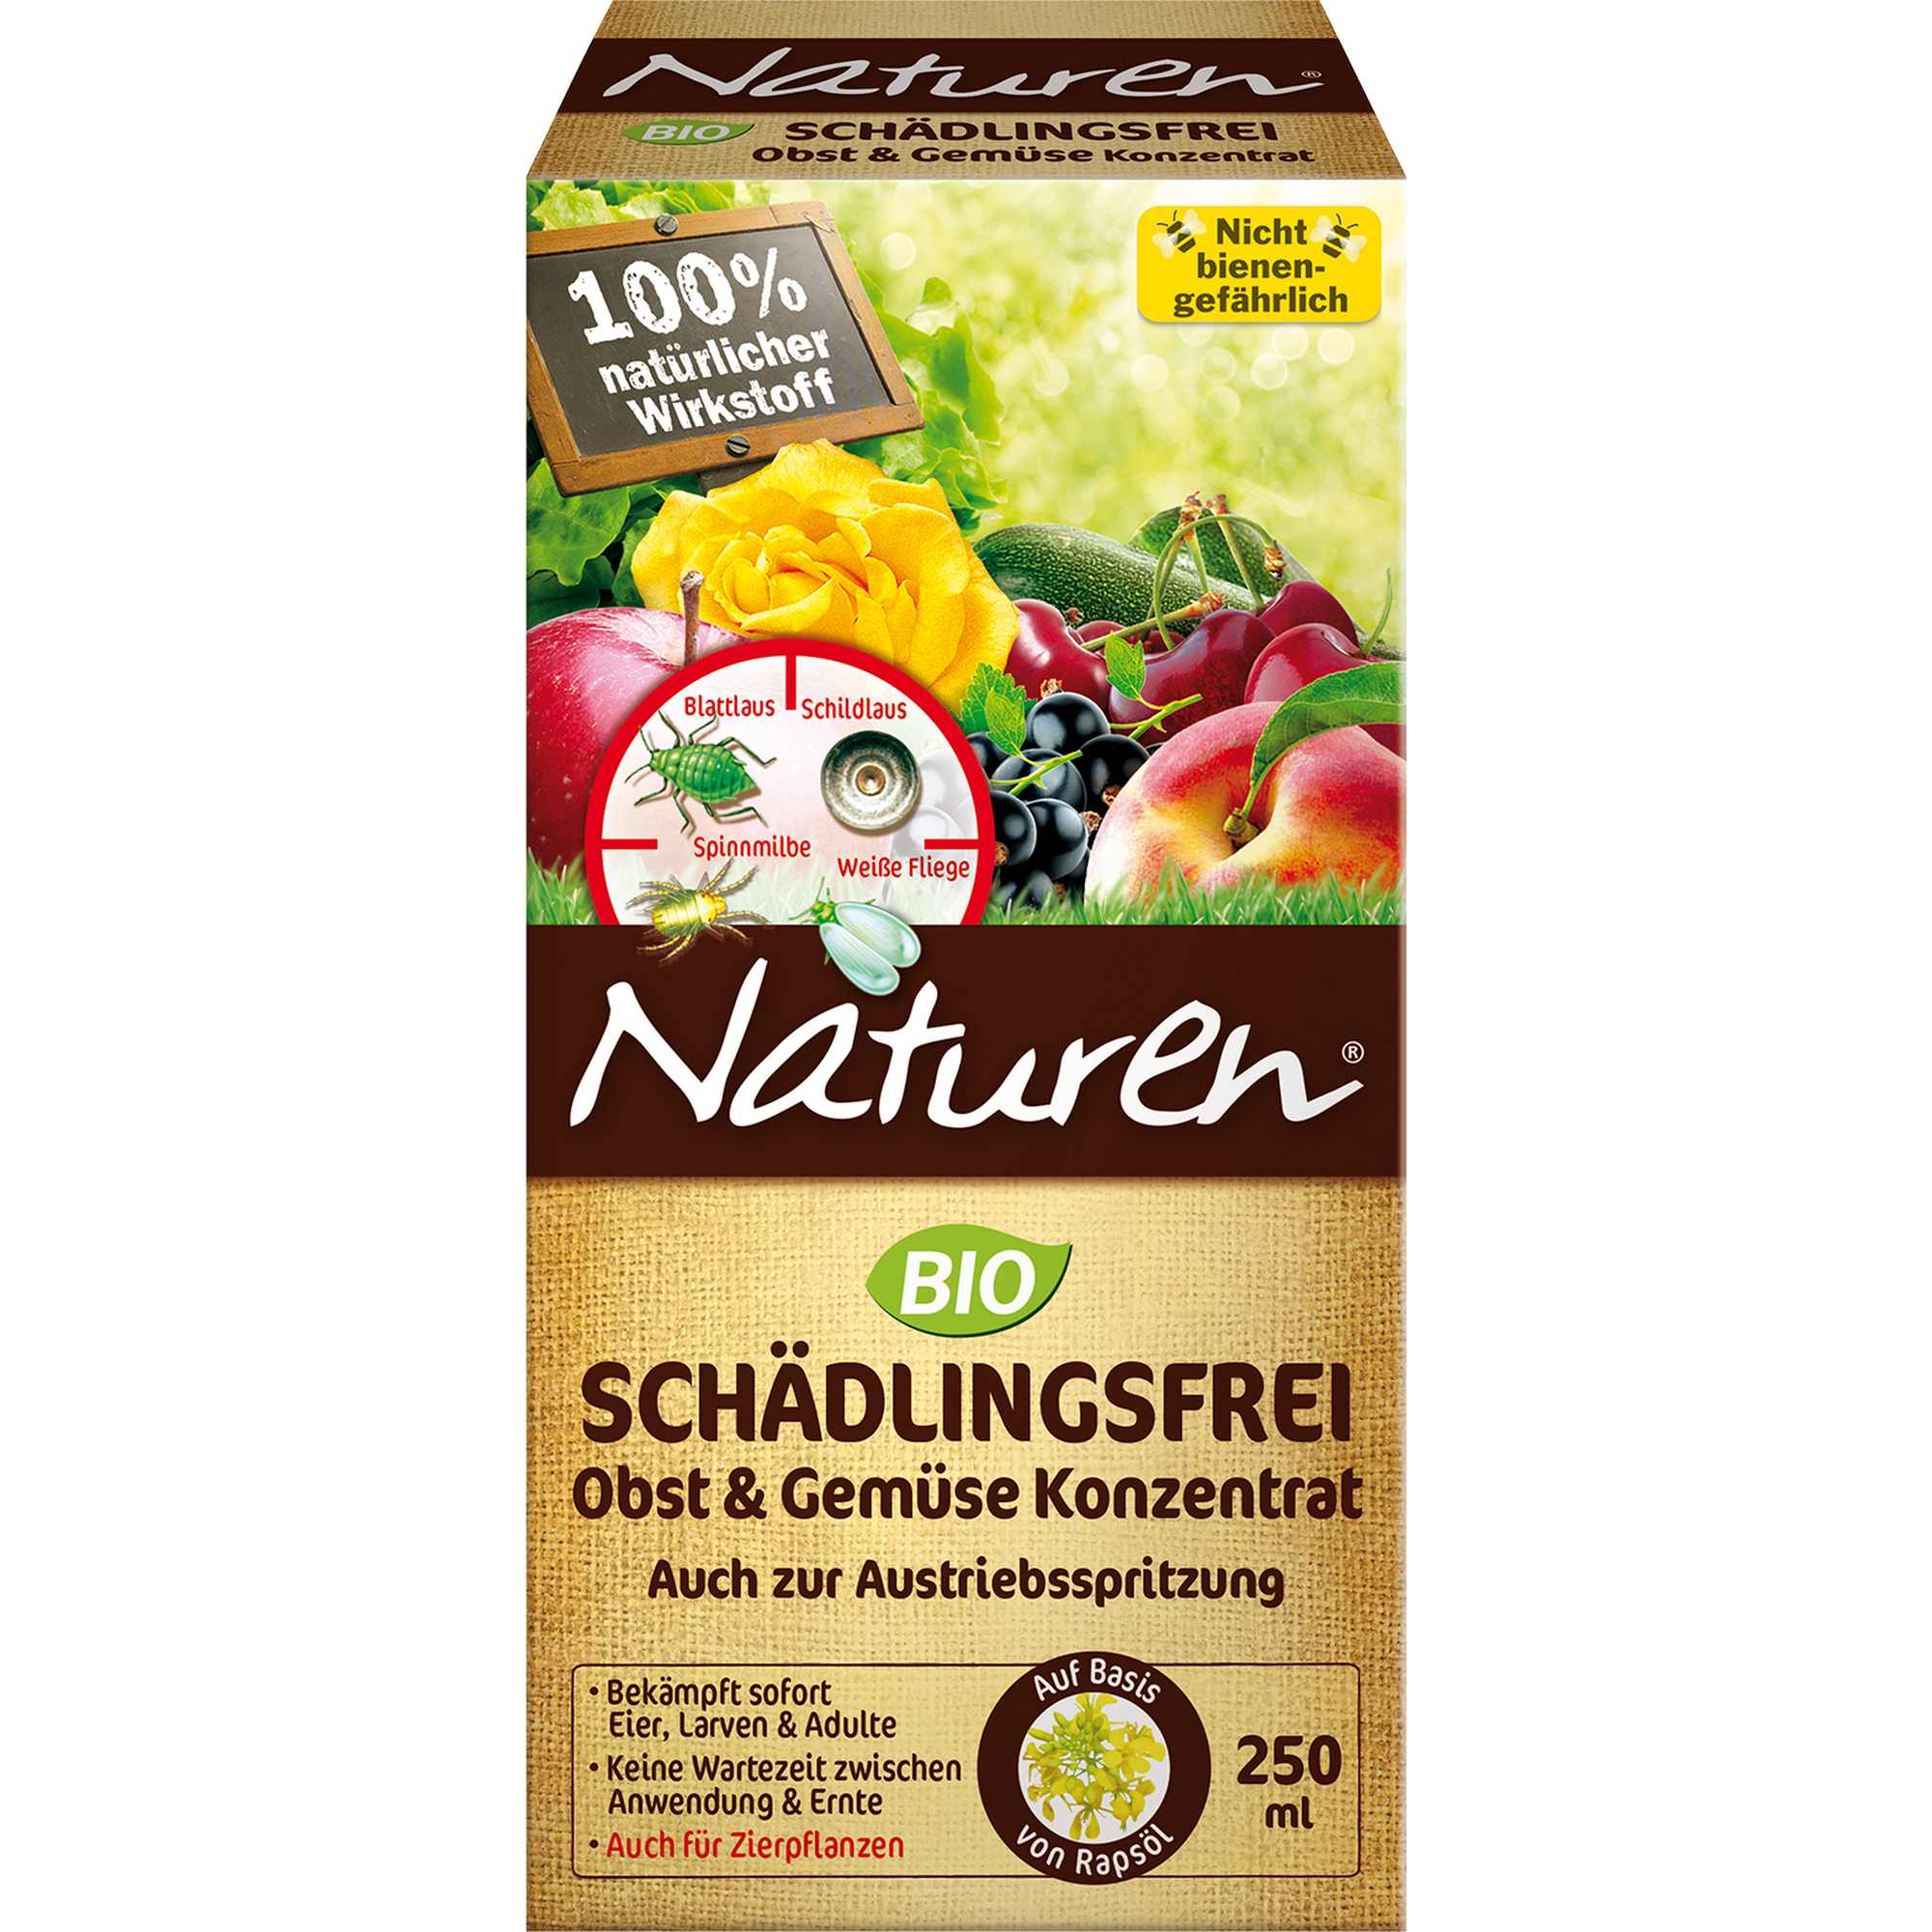 Bio Schädlingsfrei Obst & Gemüse Konzentrat 250 ml + product picture